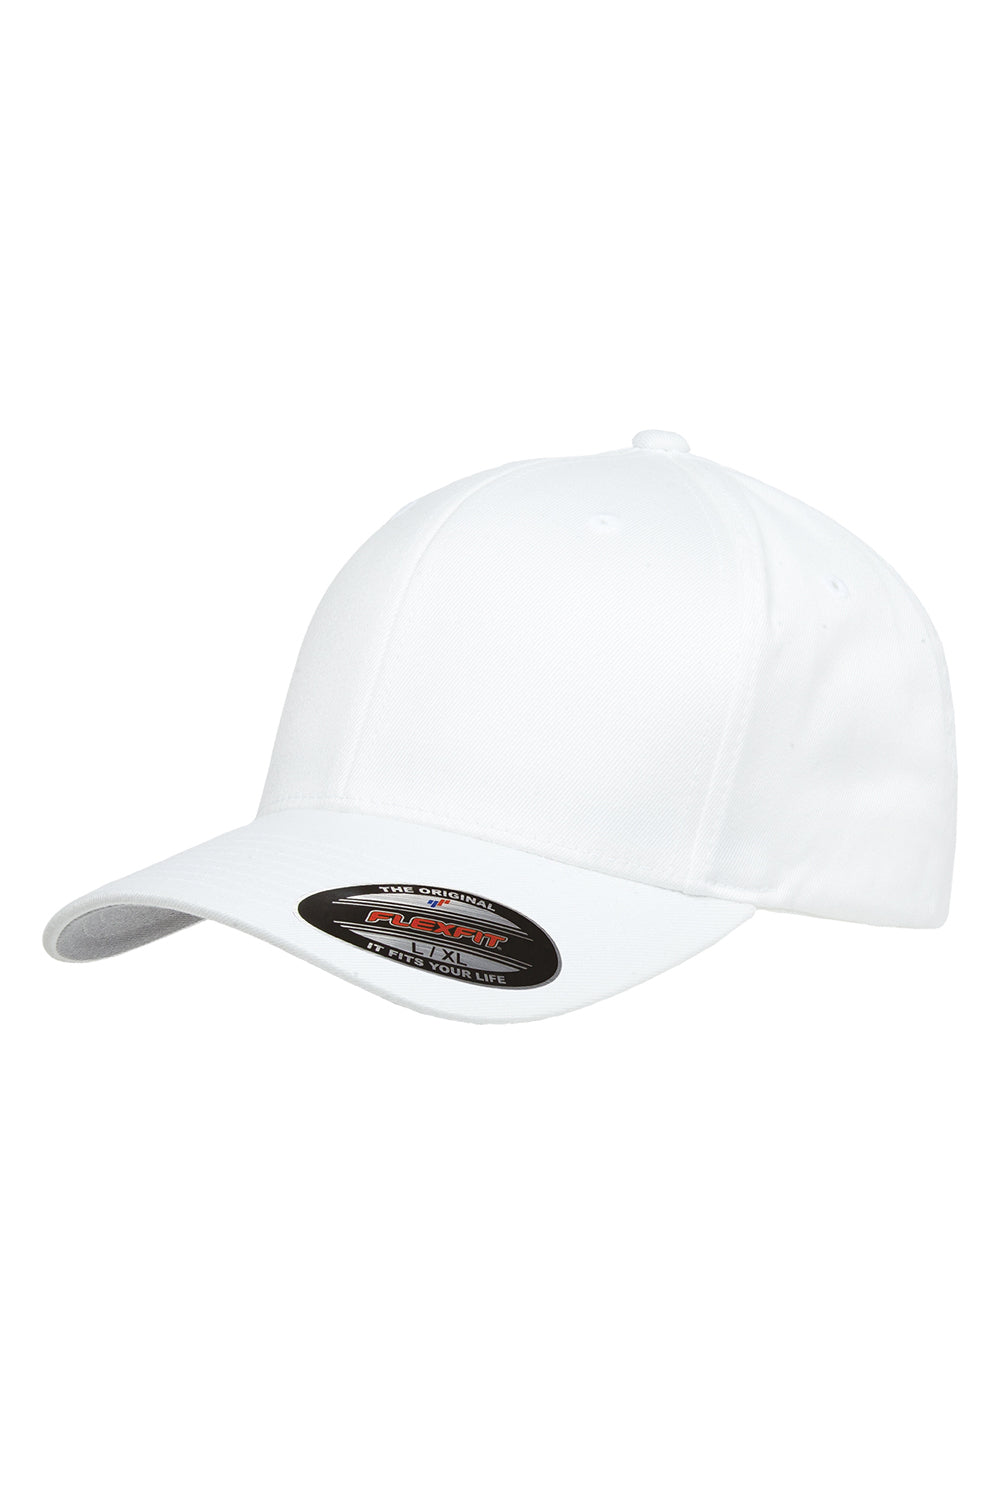 Flexfit 6277 Mens Stretch Fit Hat White Front